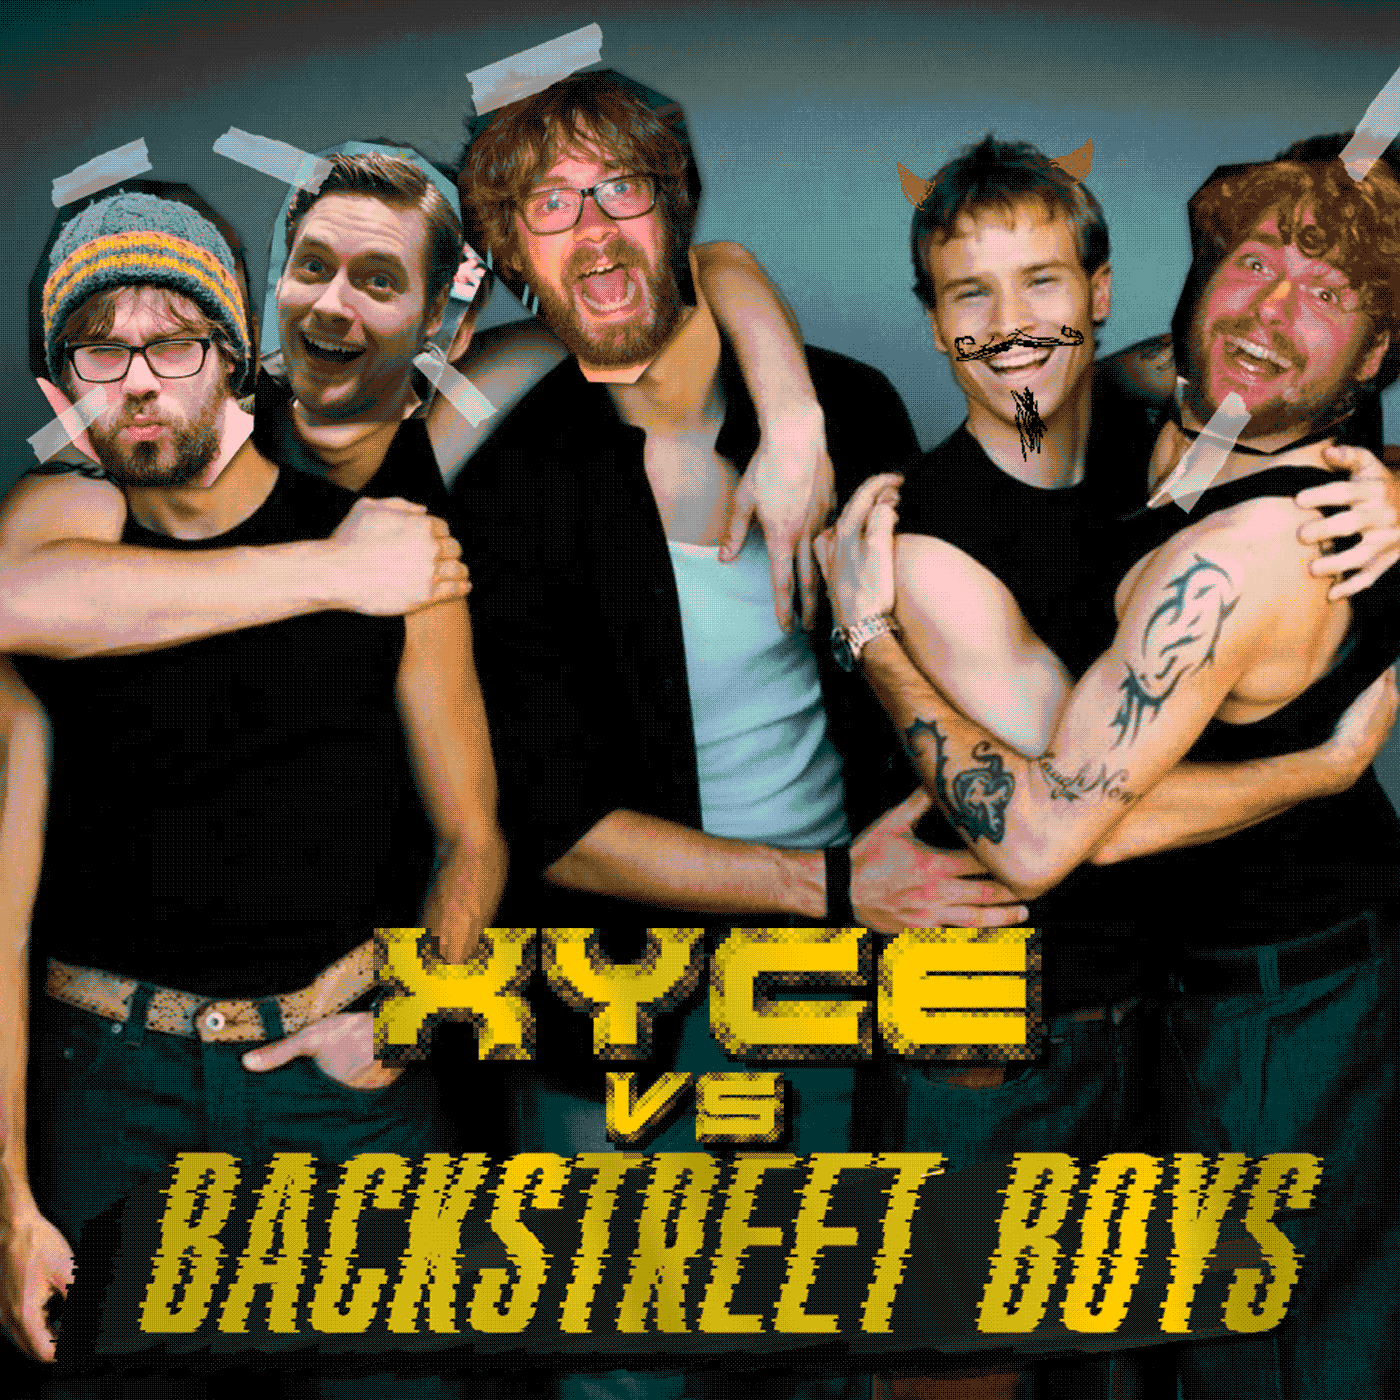 Backstreet boys mp3. Backstreet boys. Backstreet boys larger than Life. Клип группы Backstreet. Larger than Life boys.